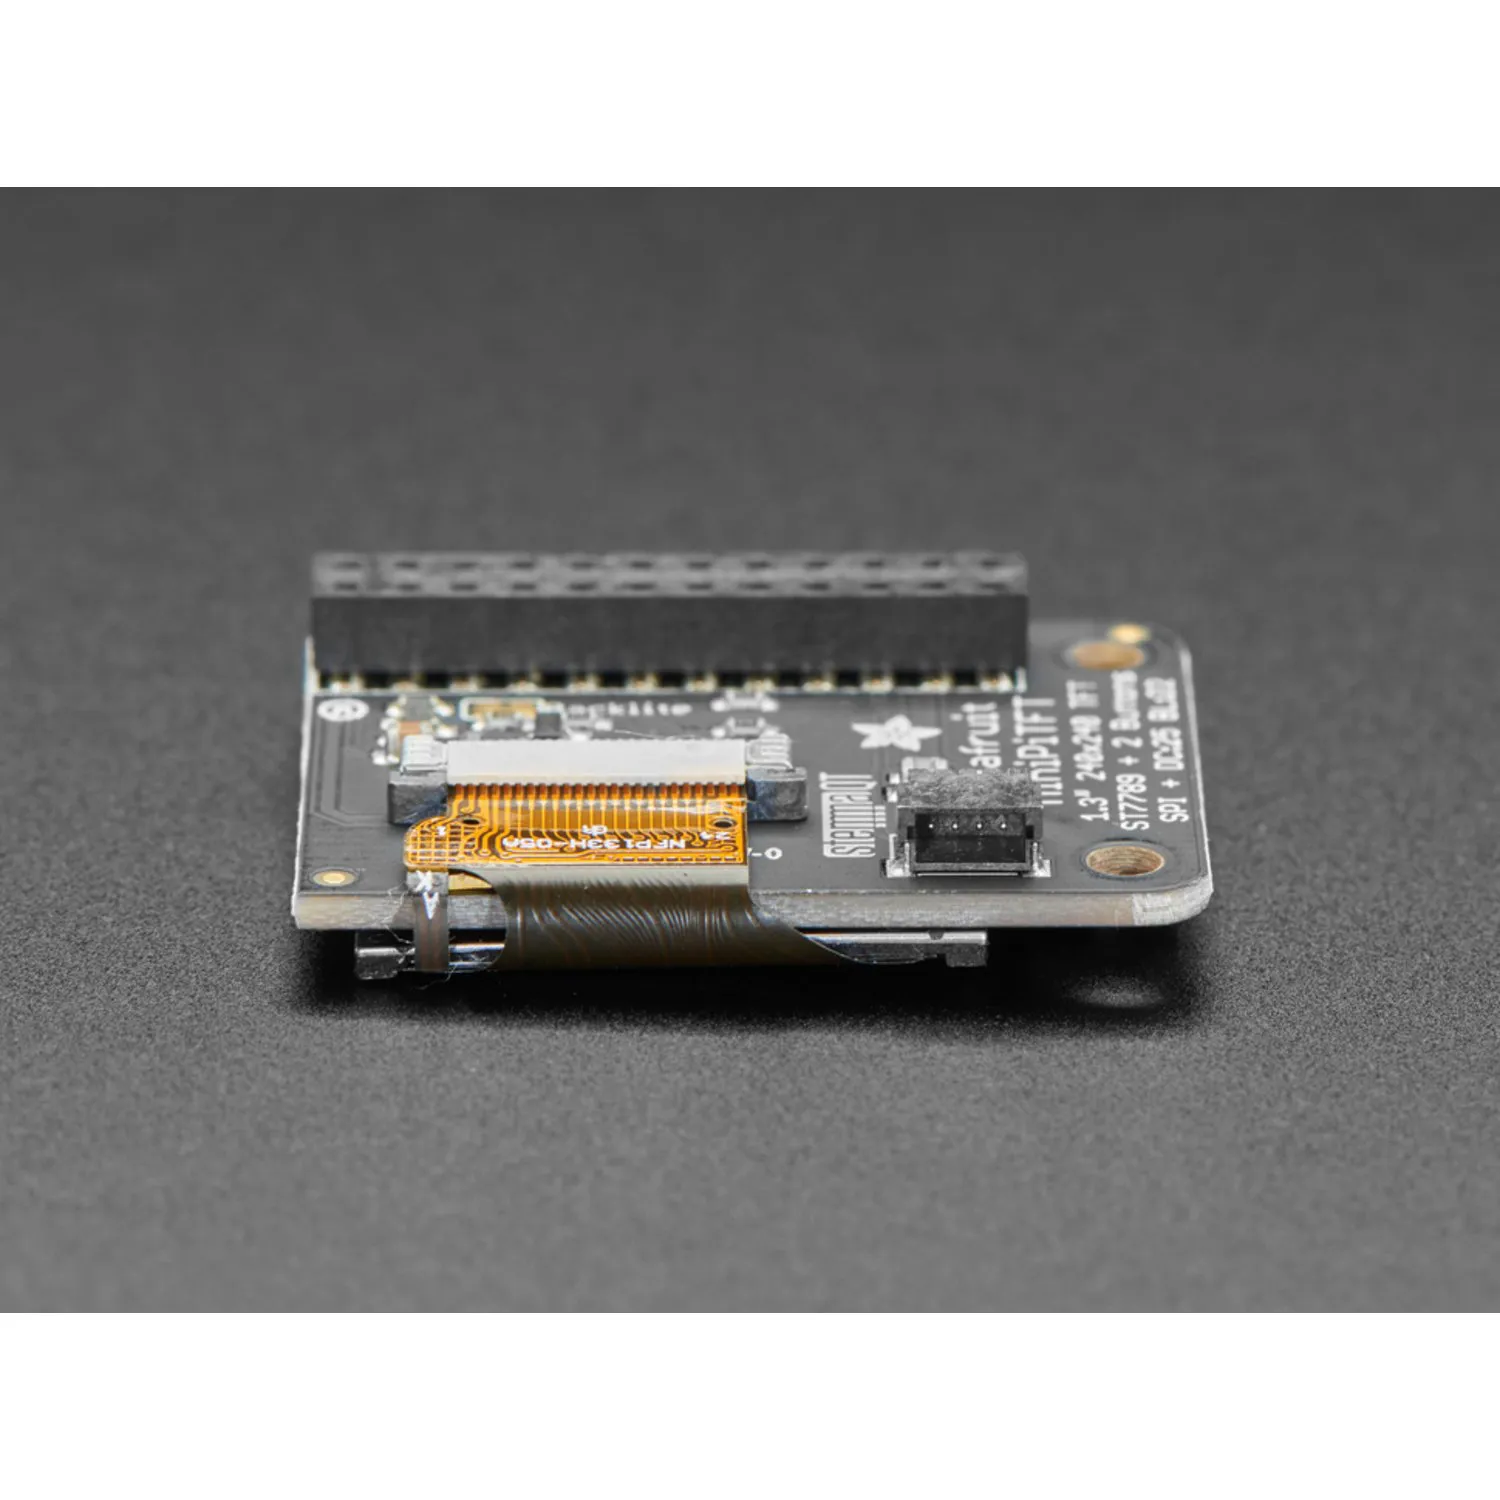 Photo of Adafruit Mini PiTFT 1.3 - 240x240 TFT Add-on for Raspberry Pi